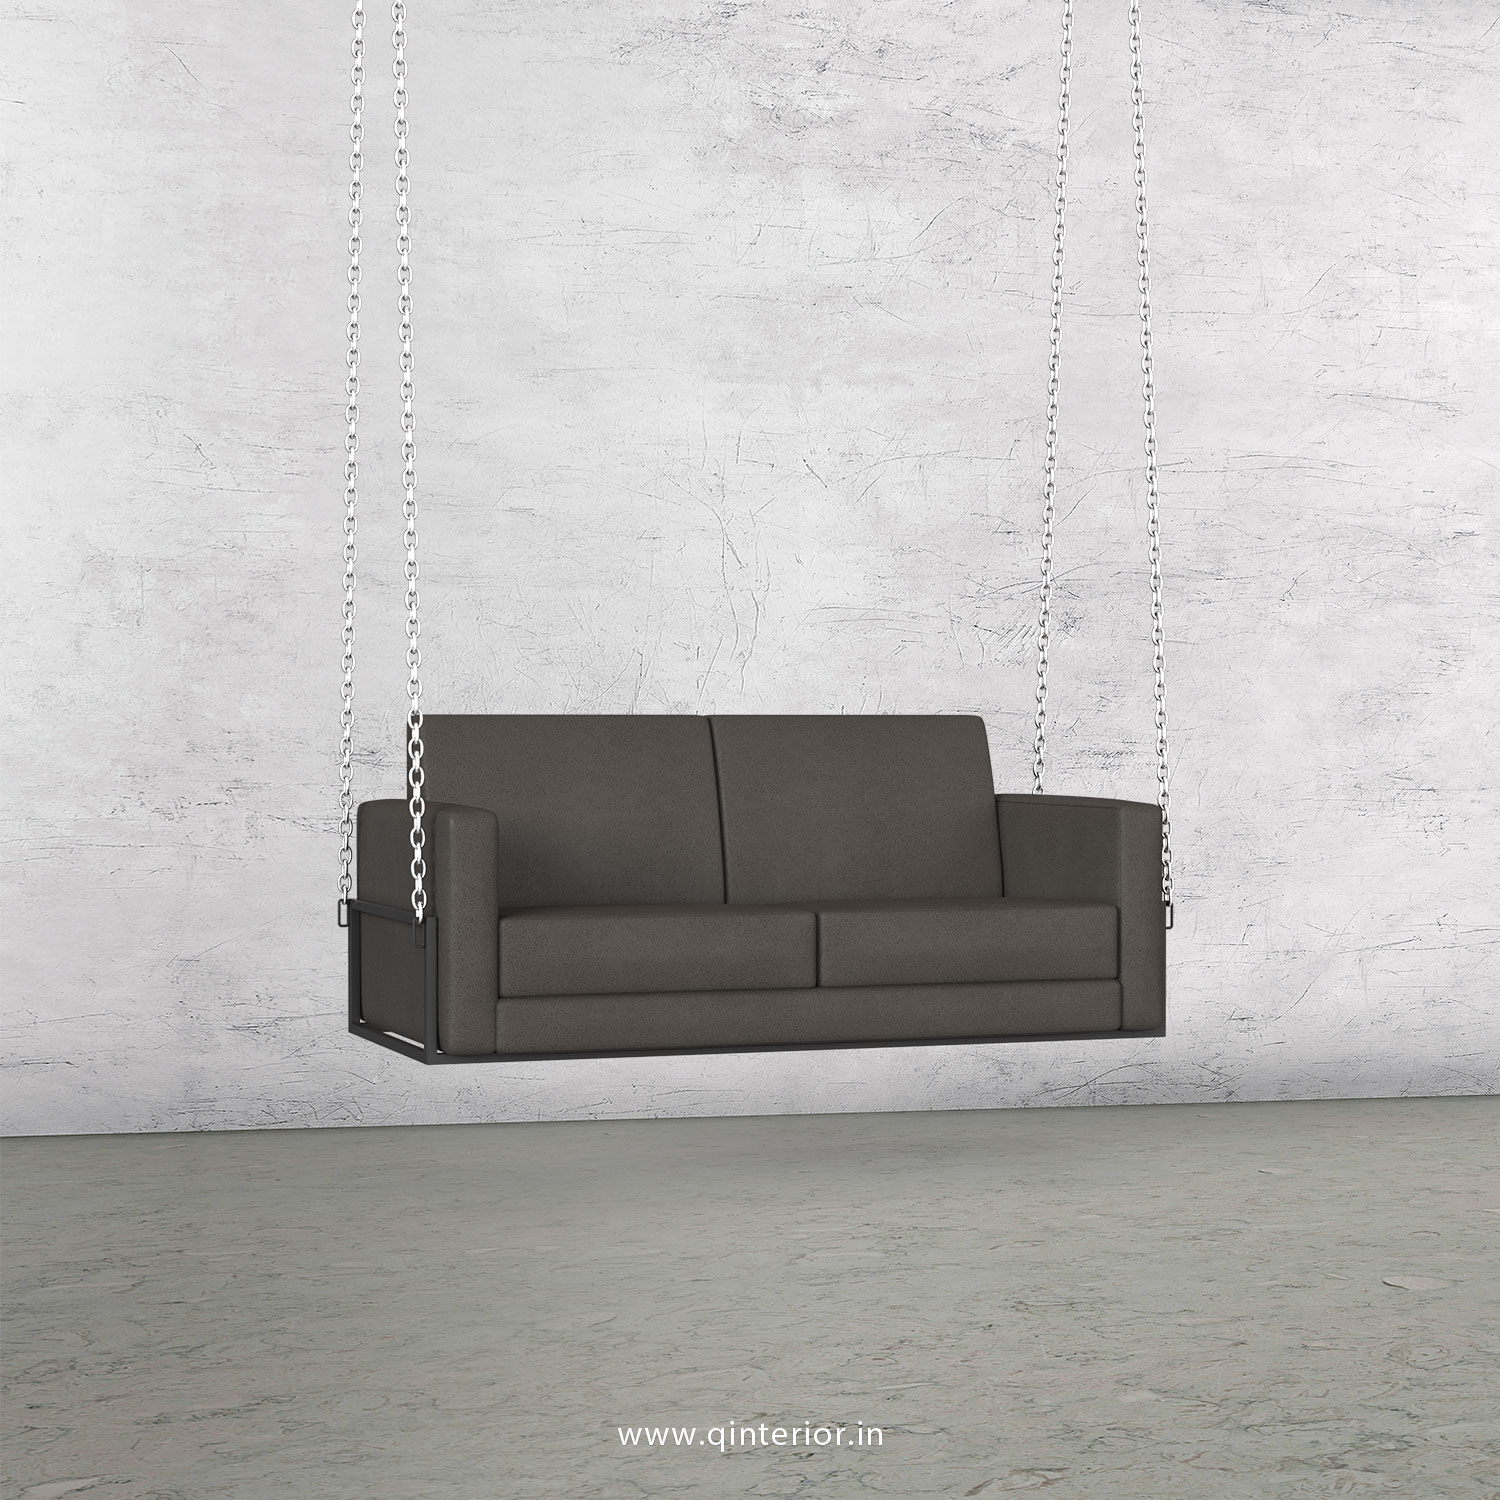 NIRVANA 2 Seater Swing Sofa in Fab Leather Fabric - SSF001 FL11